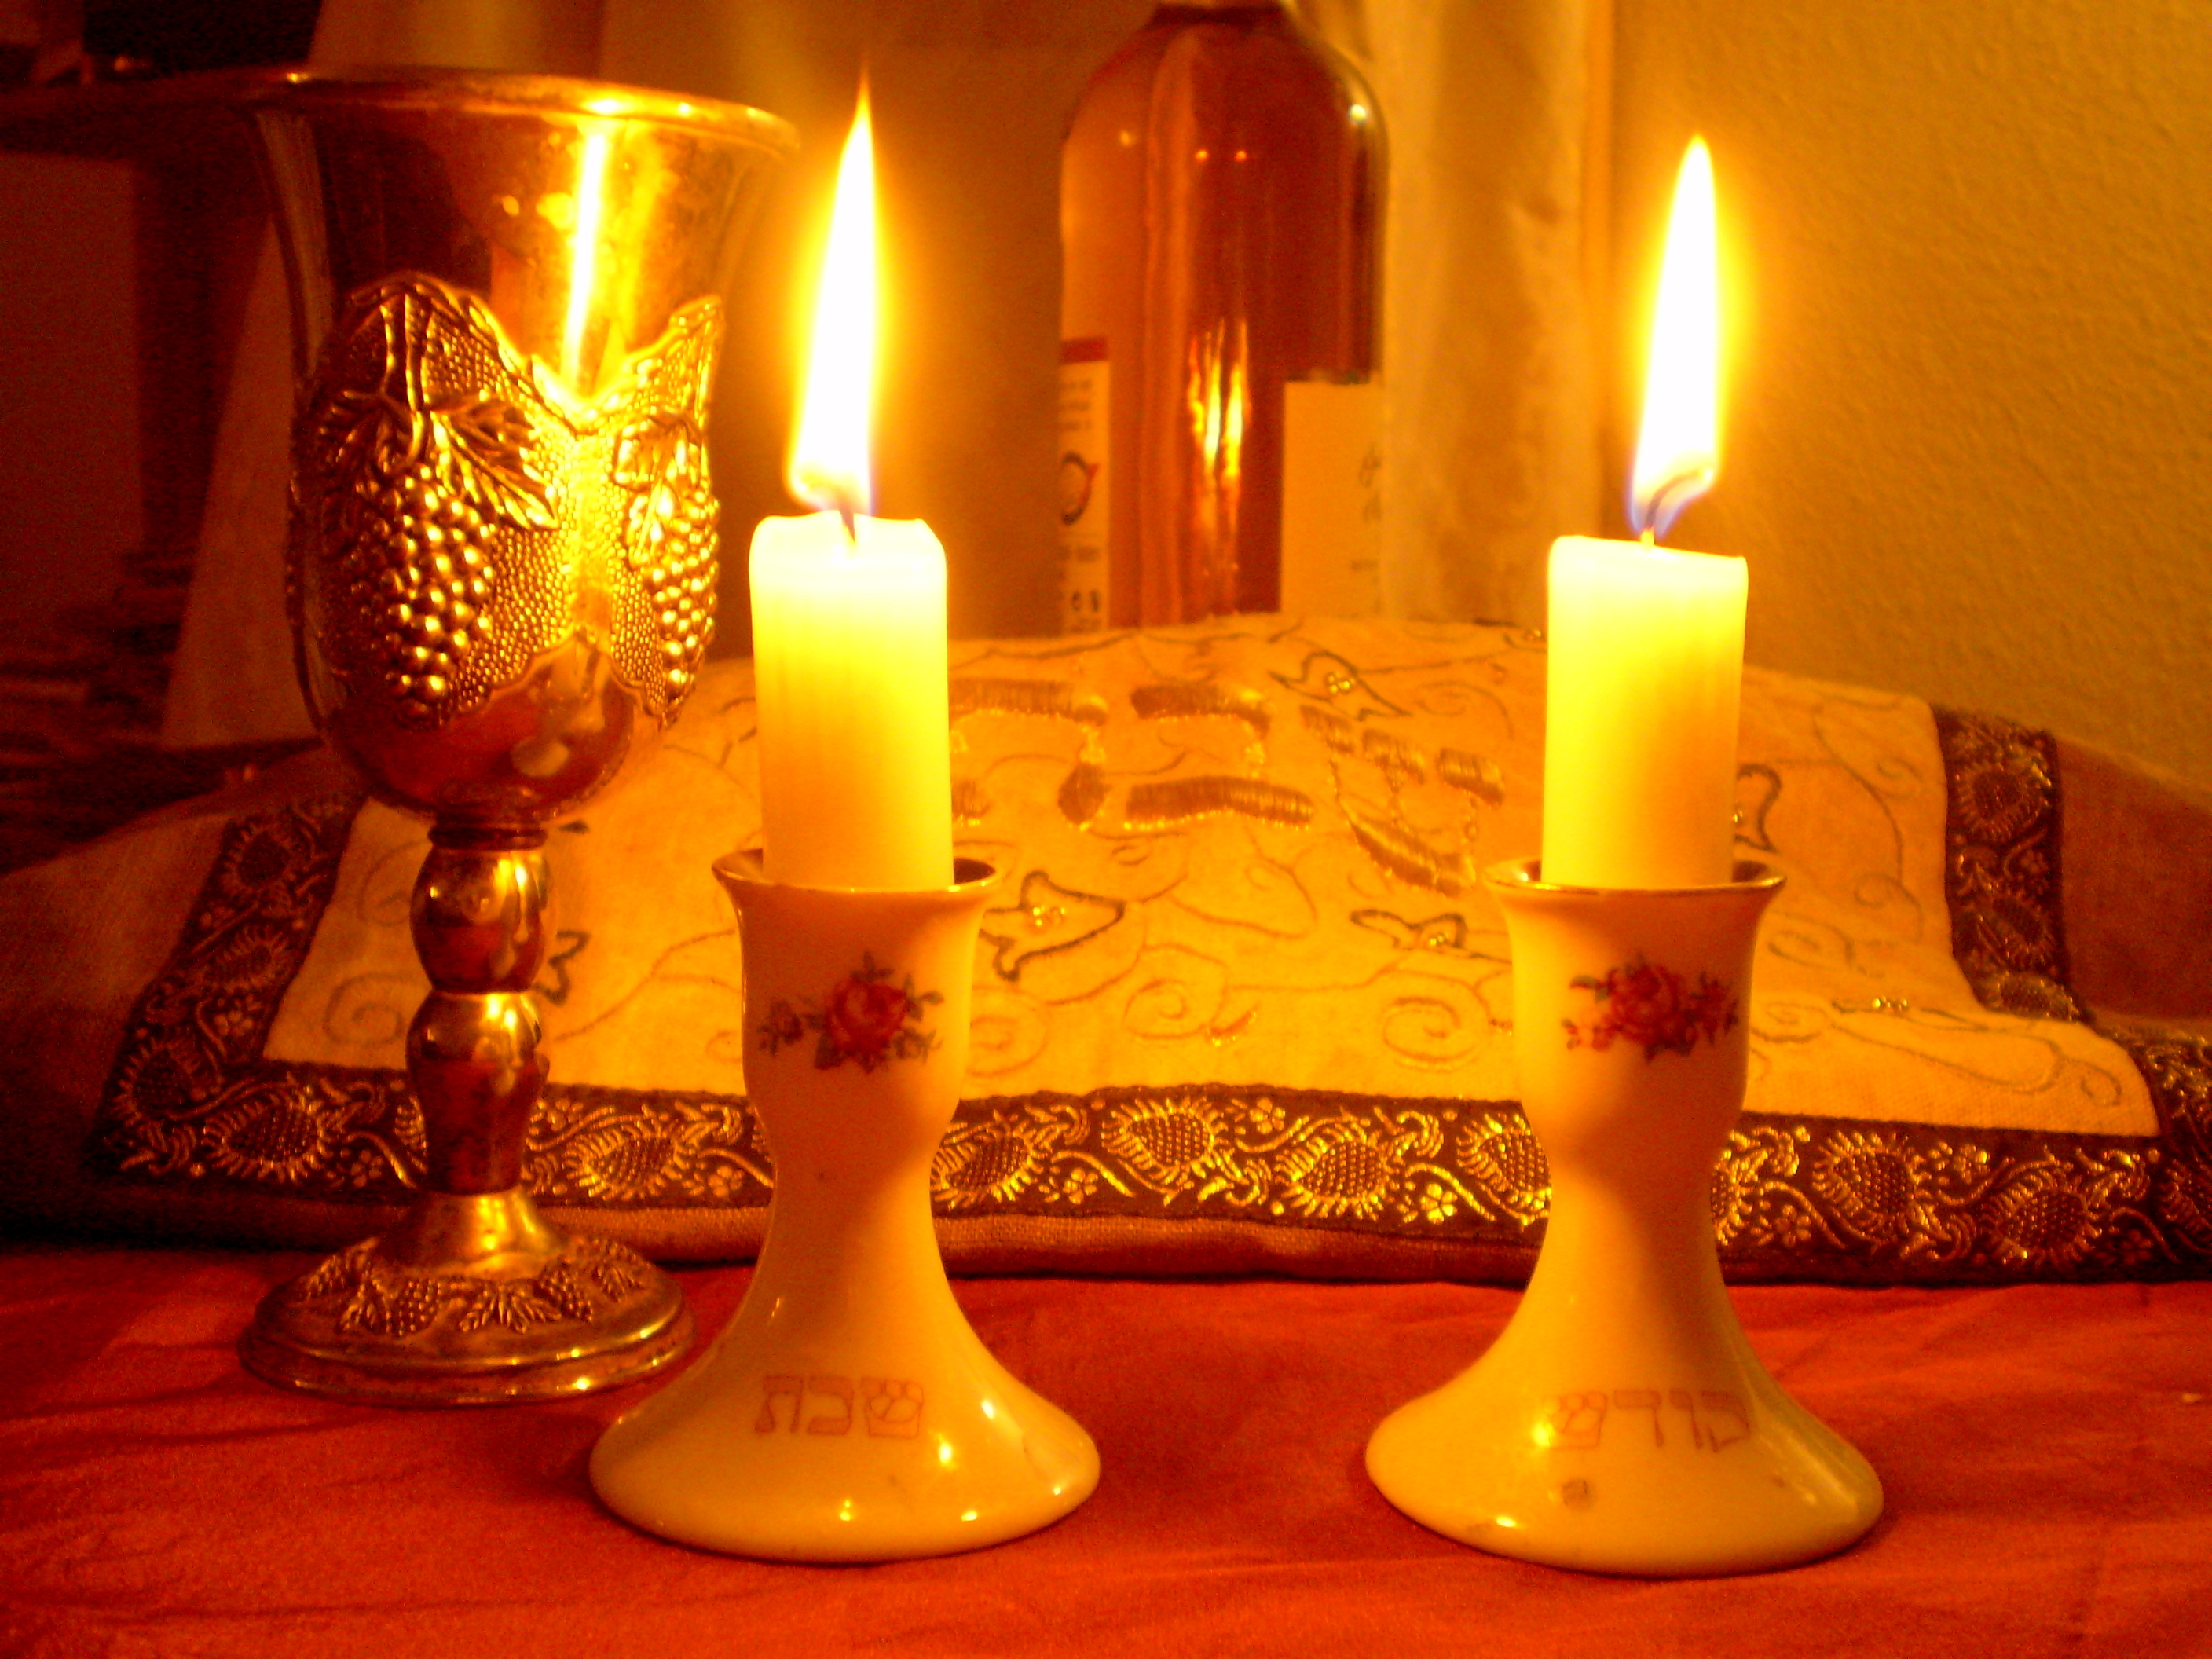 Shabbath Candles Google image from https://upload.wikimedia.org/wikipedia/commons/d/df/Shabbat_Candles.jpg